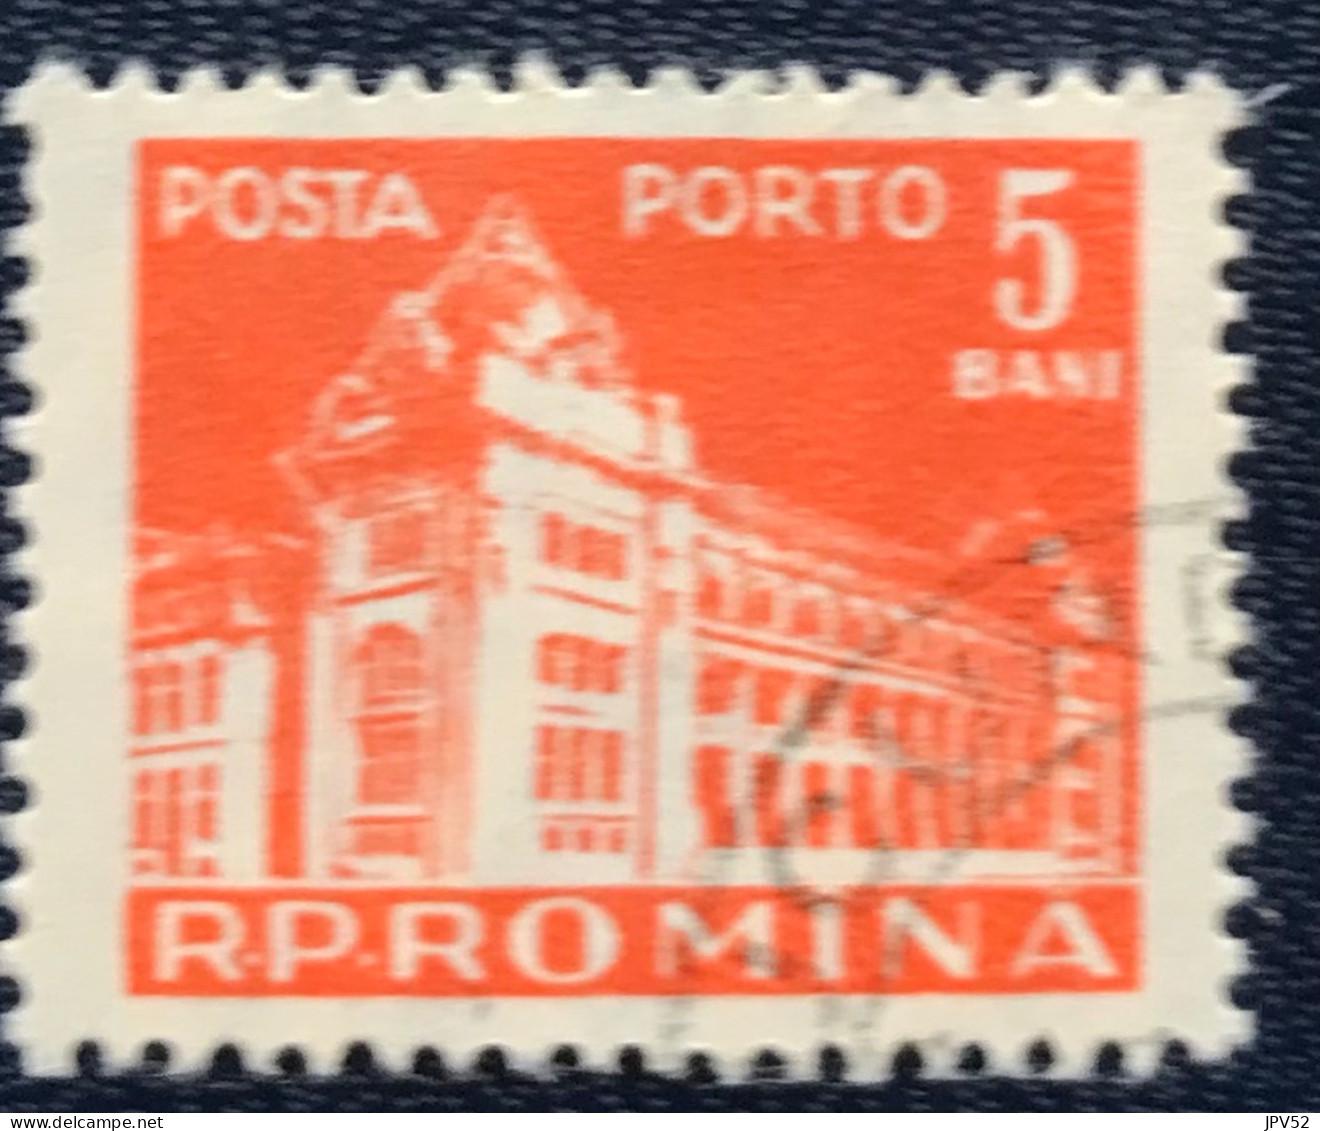 Romana - Roemenië - C14/54 - 1957 - (°)used - Michel 102 - Postkantoor - Strafport